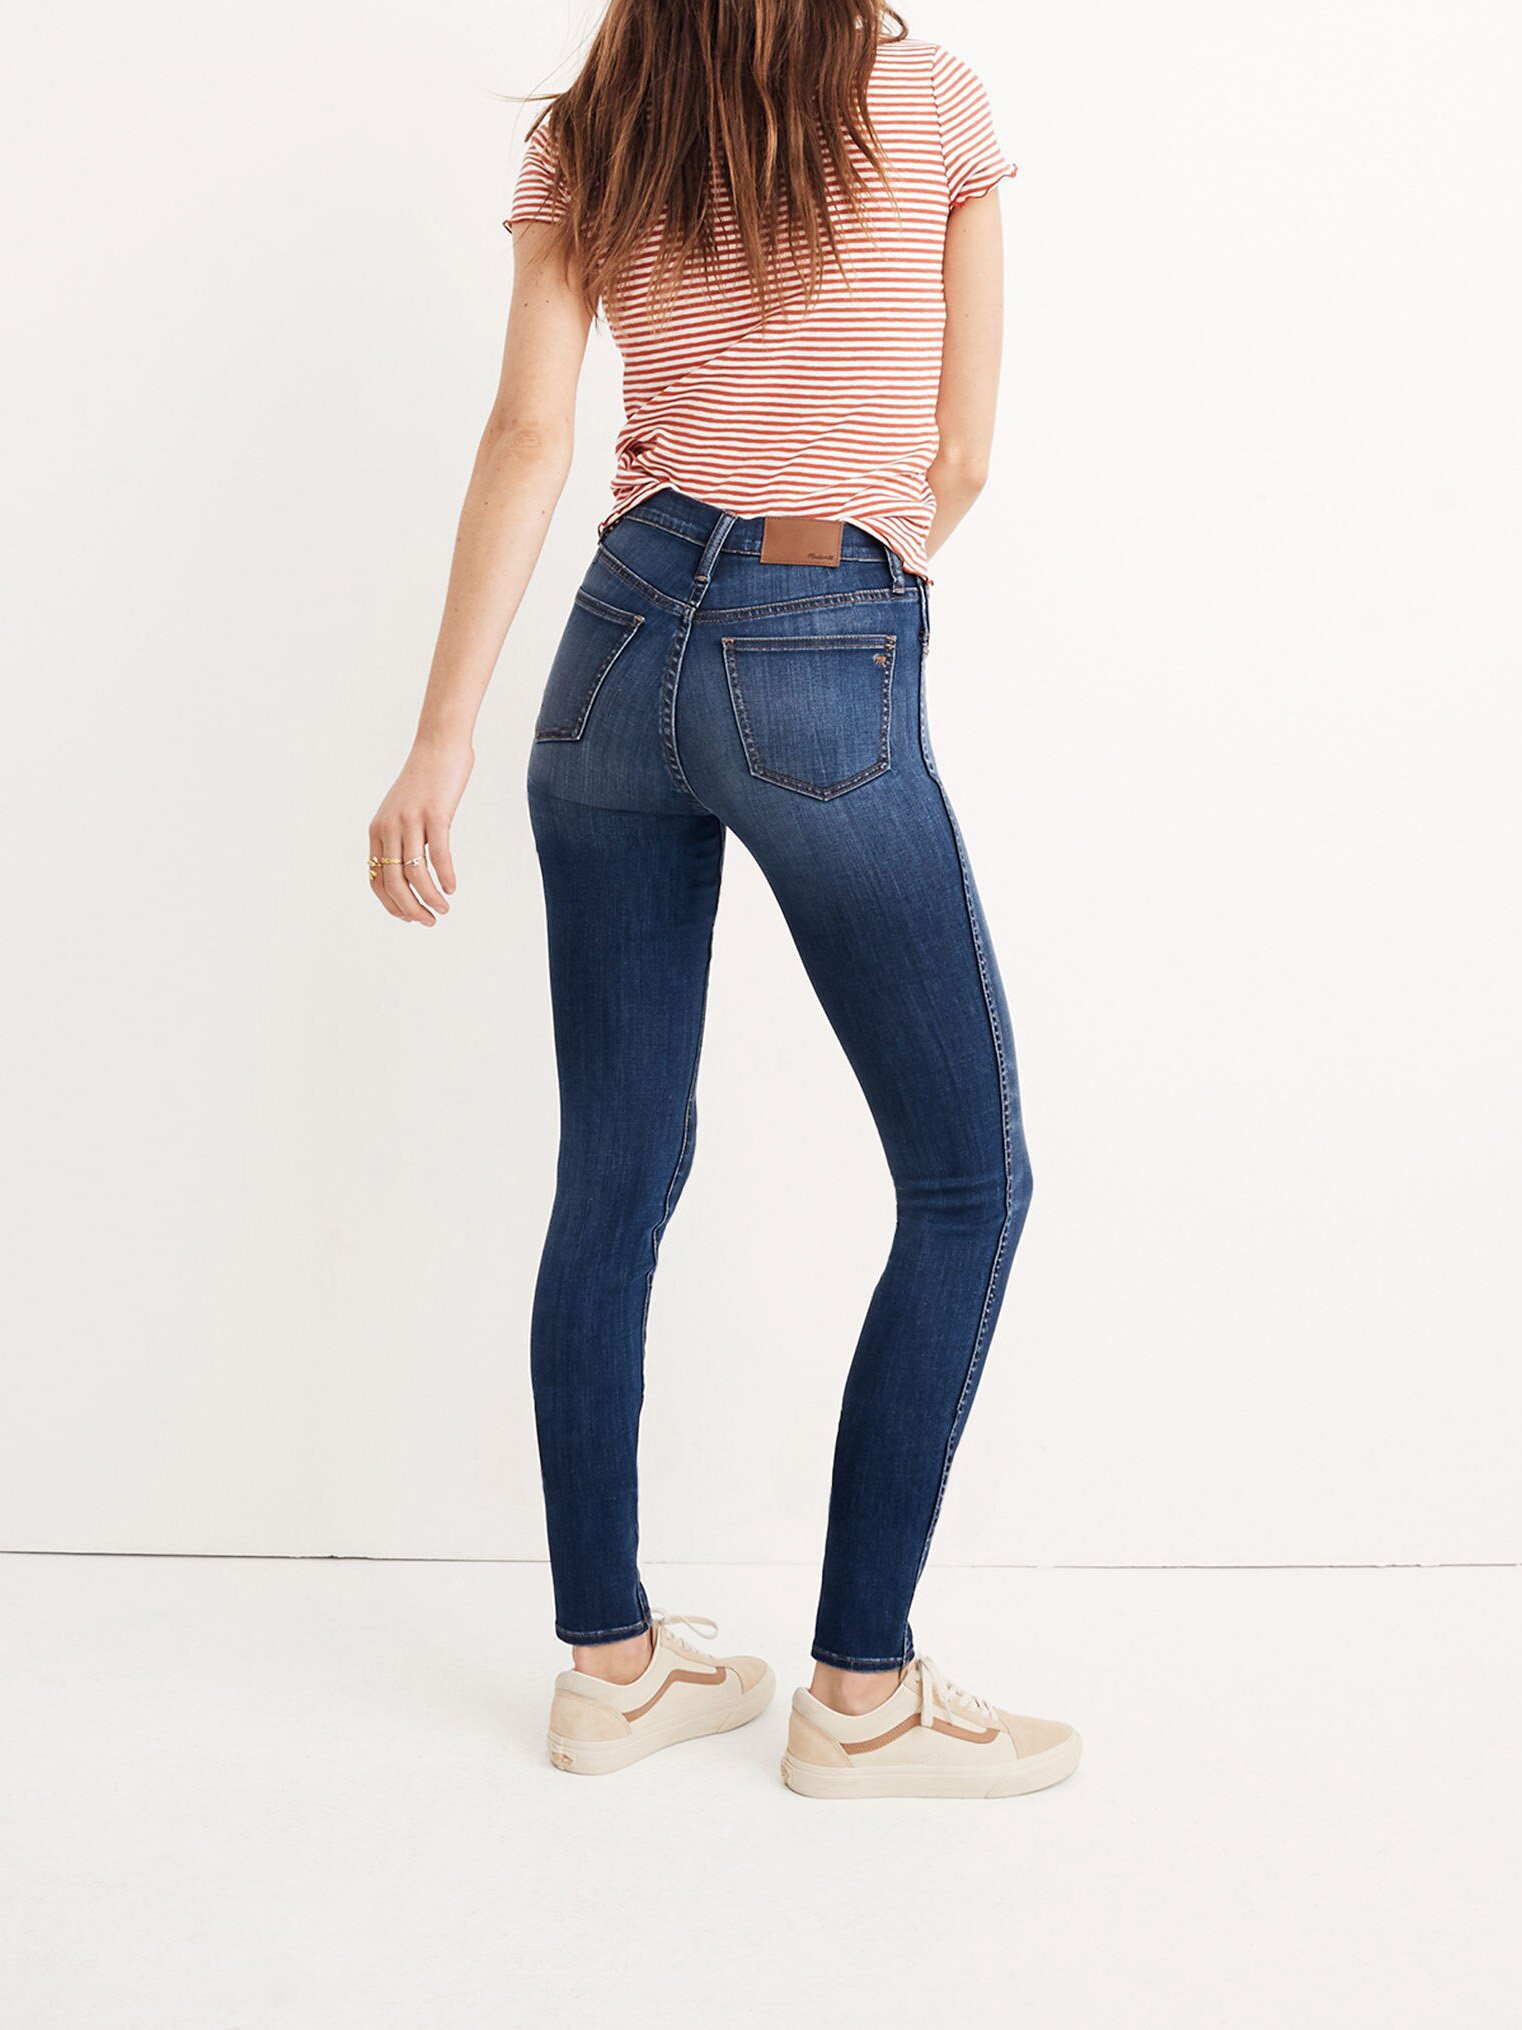 Madewell High Rise Full Length Skinny Jeans | Verishop